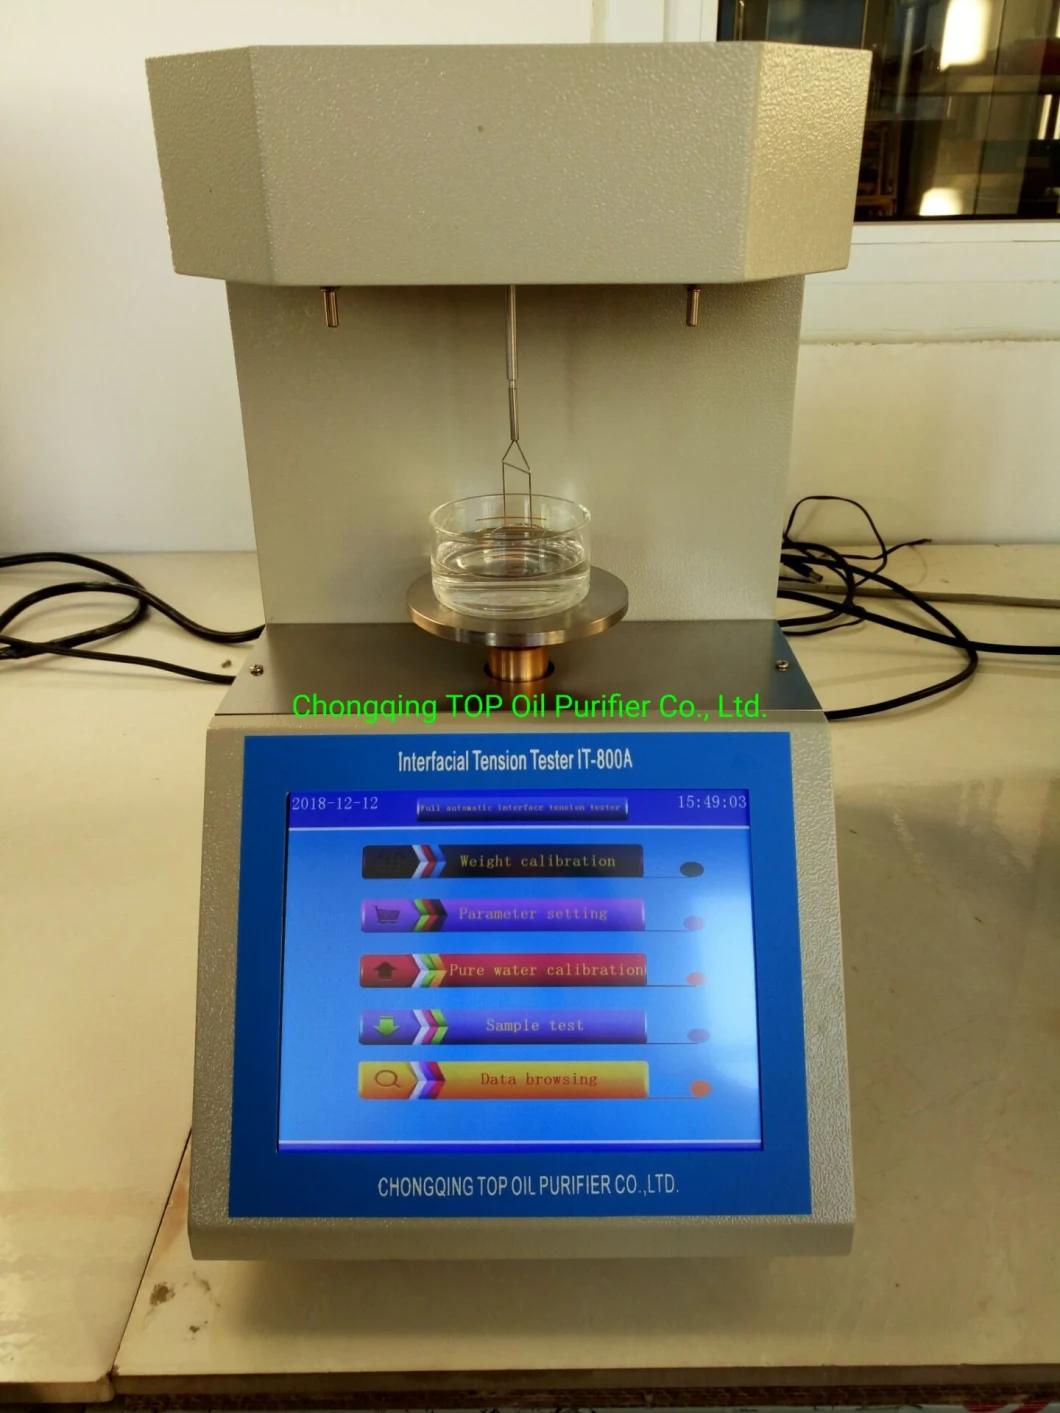 Tensiometer Testing for Transformer Oil Interfacial Tension (IT-800)